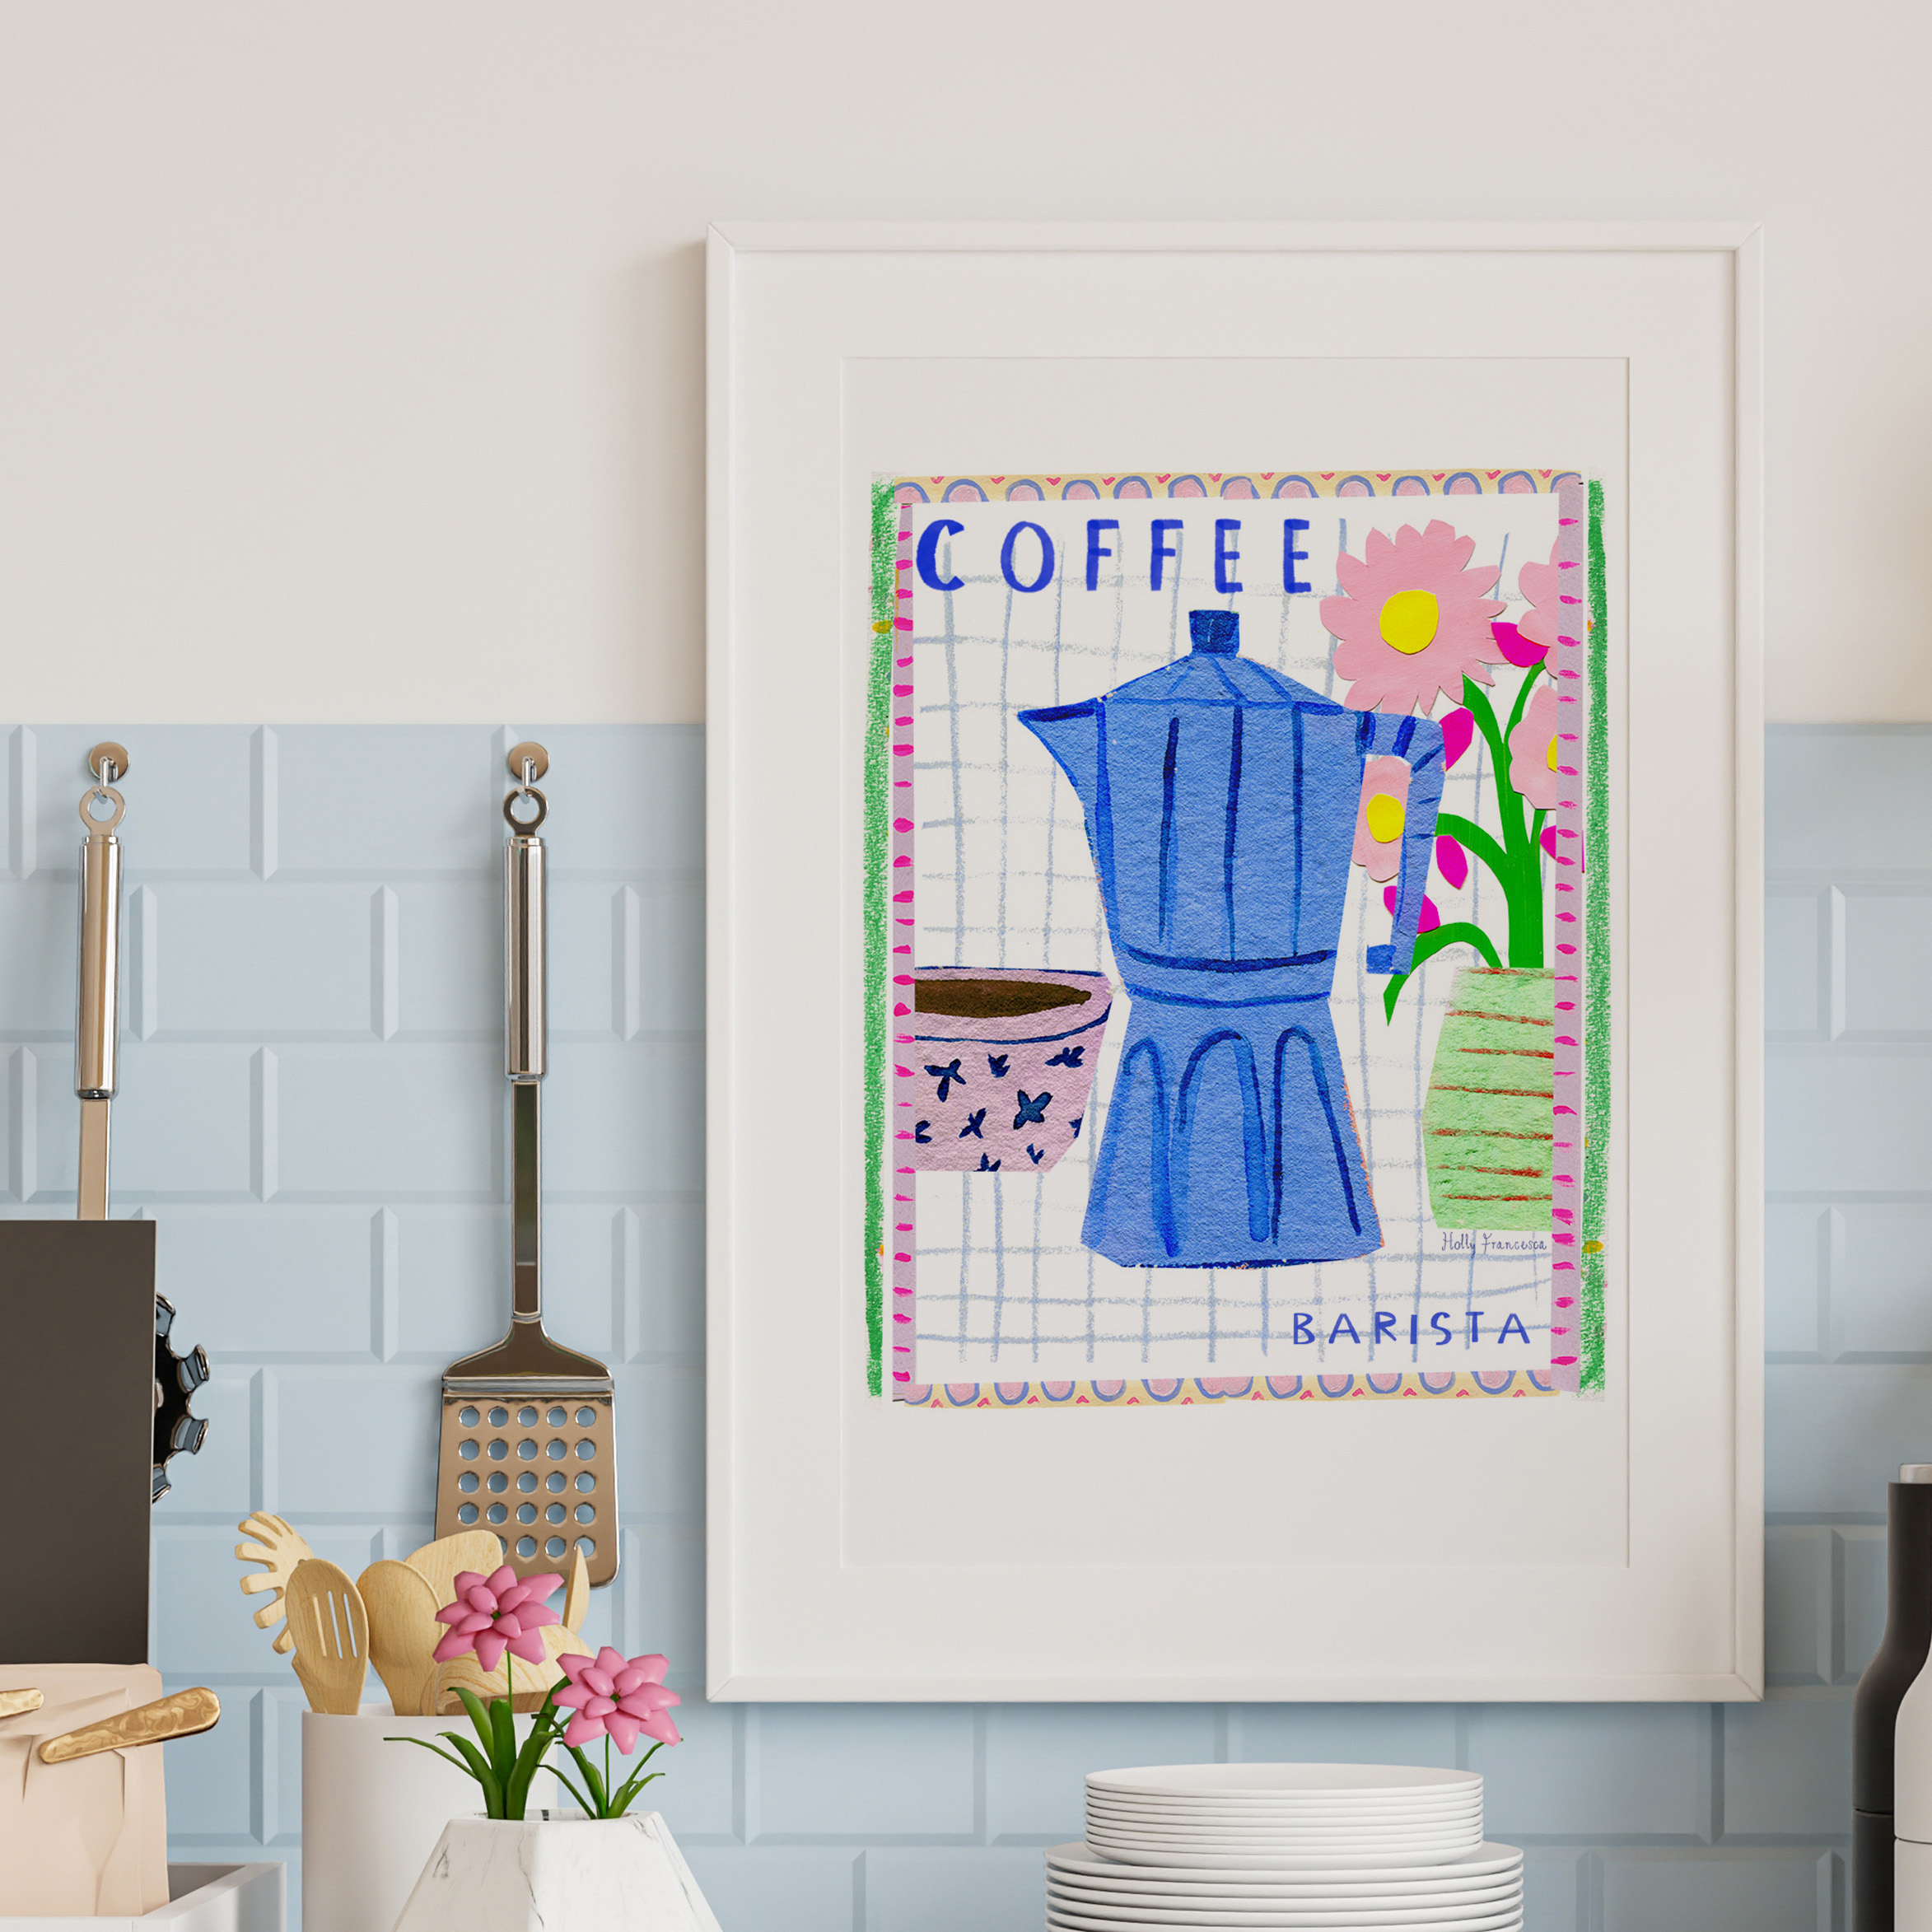 Good Morning Coffee Barista Art Print - Watercolour Collage Poster